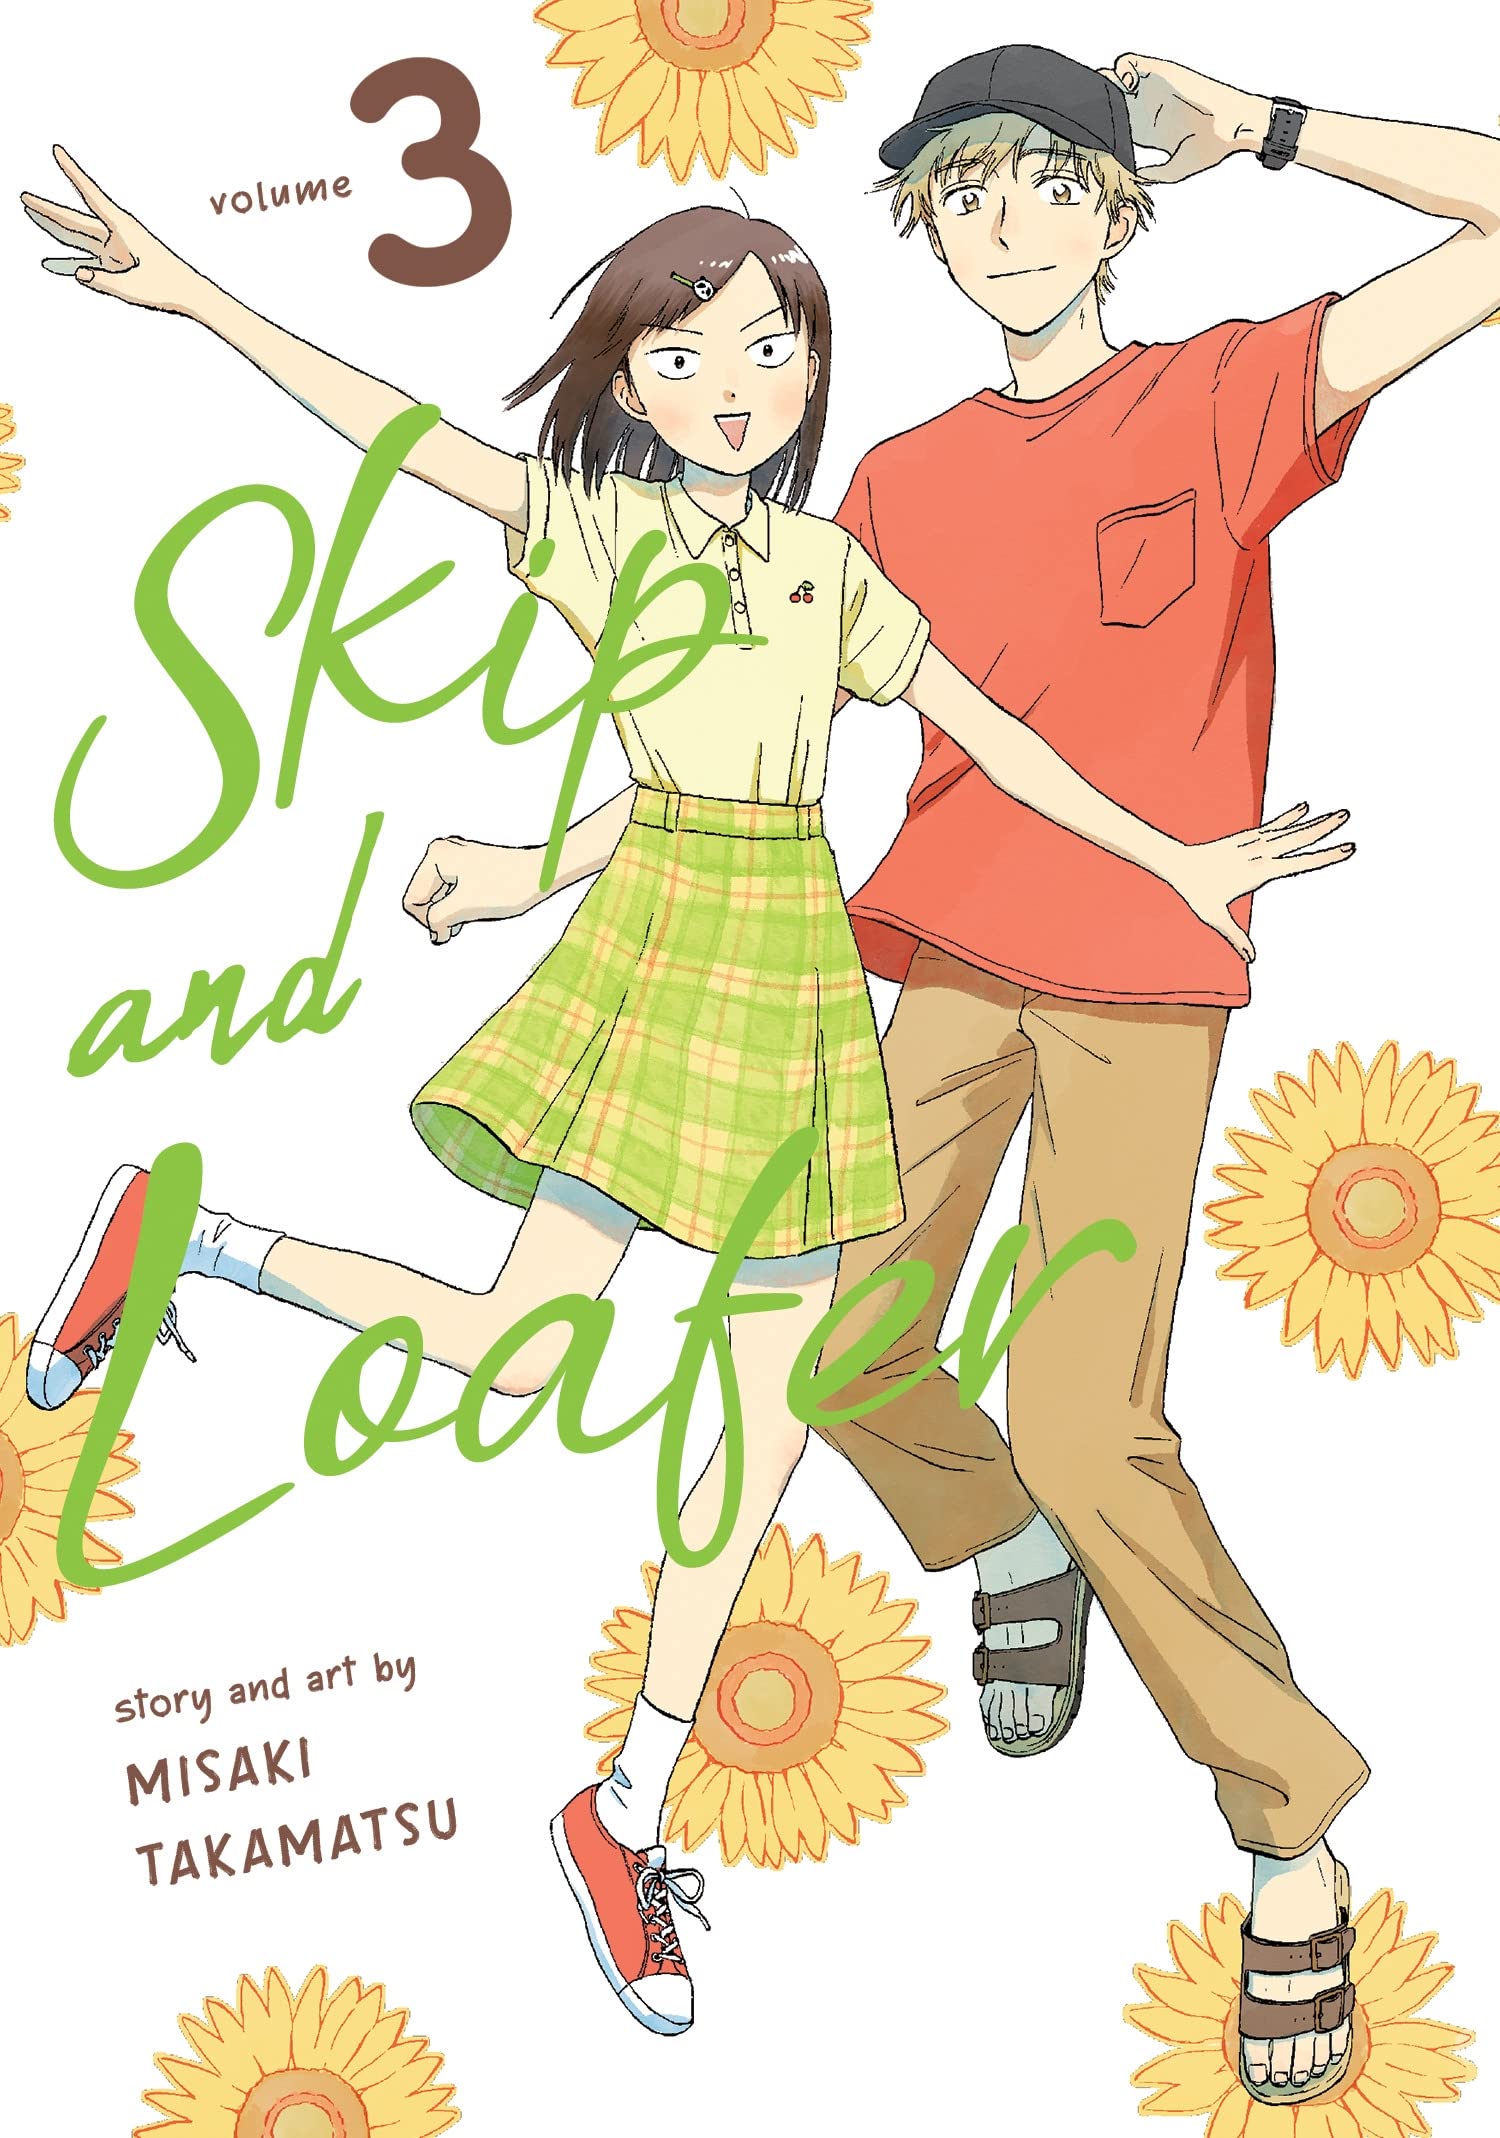 Skip and Loafer - Volume 3 | Misaki Takamatsu